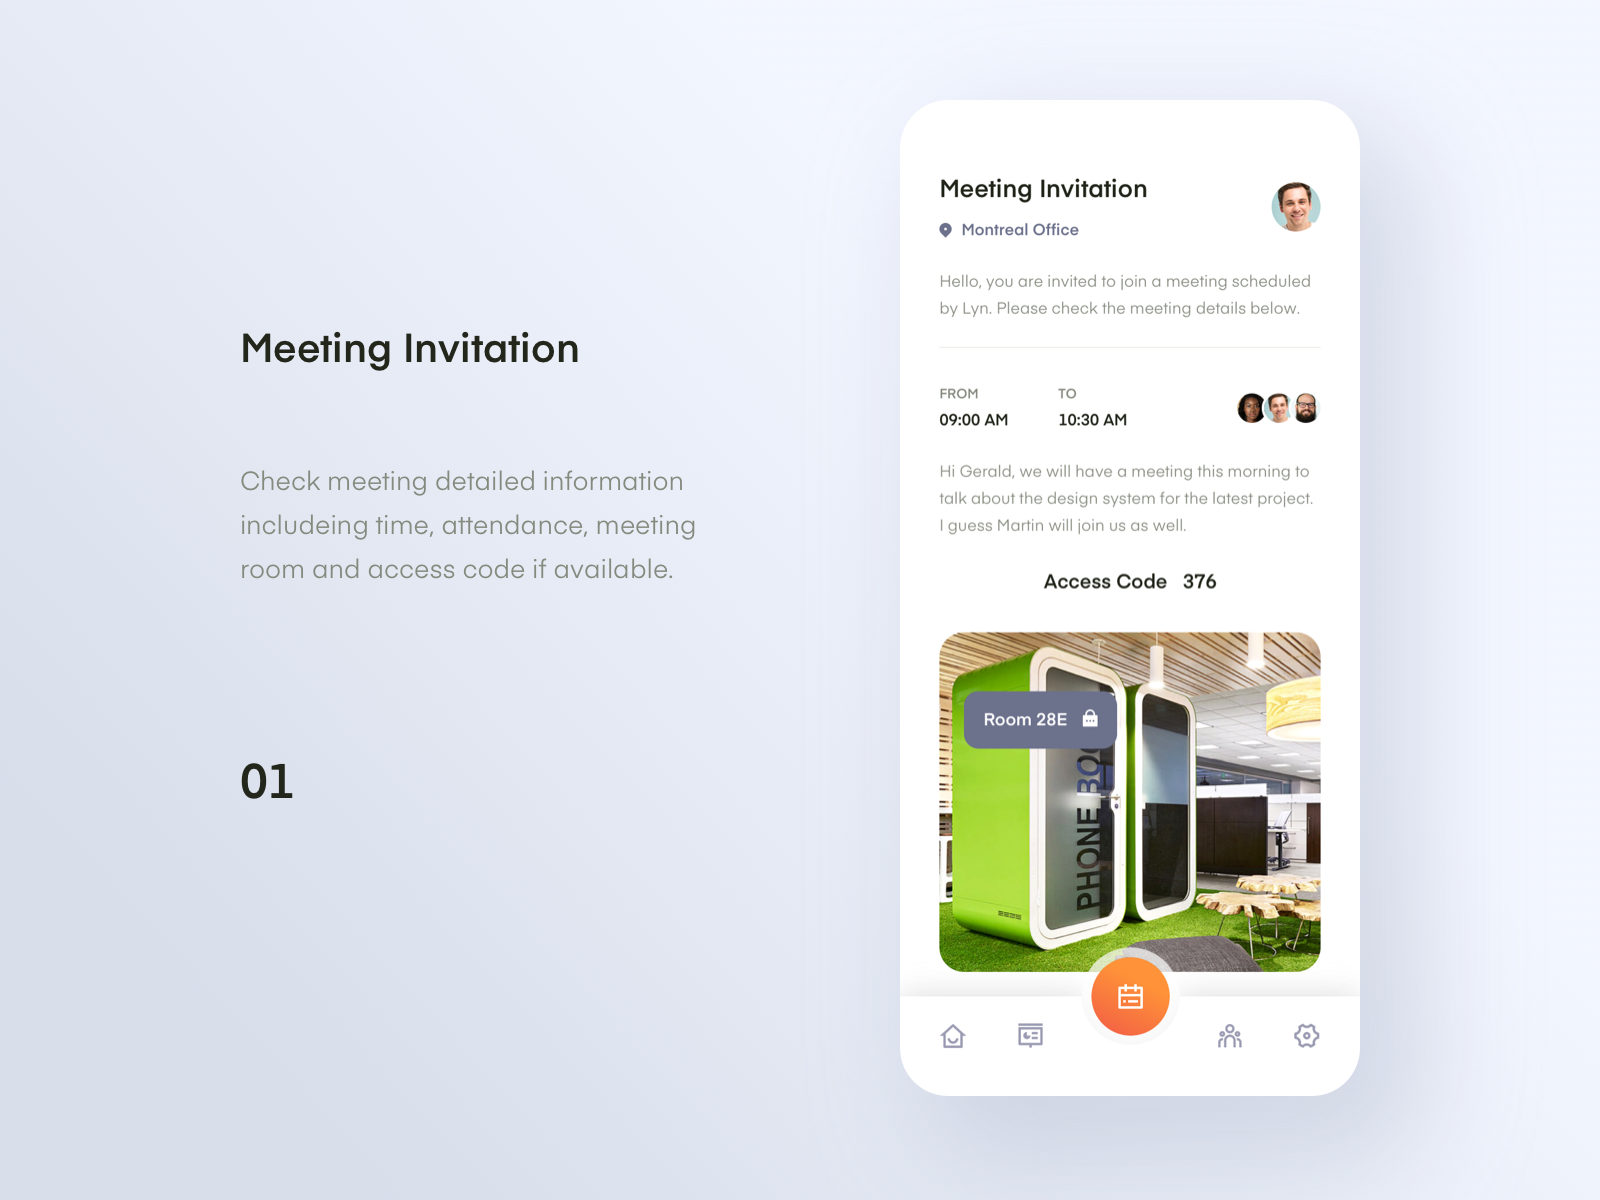 Meeting Room Reservation App.